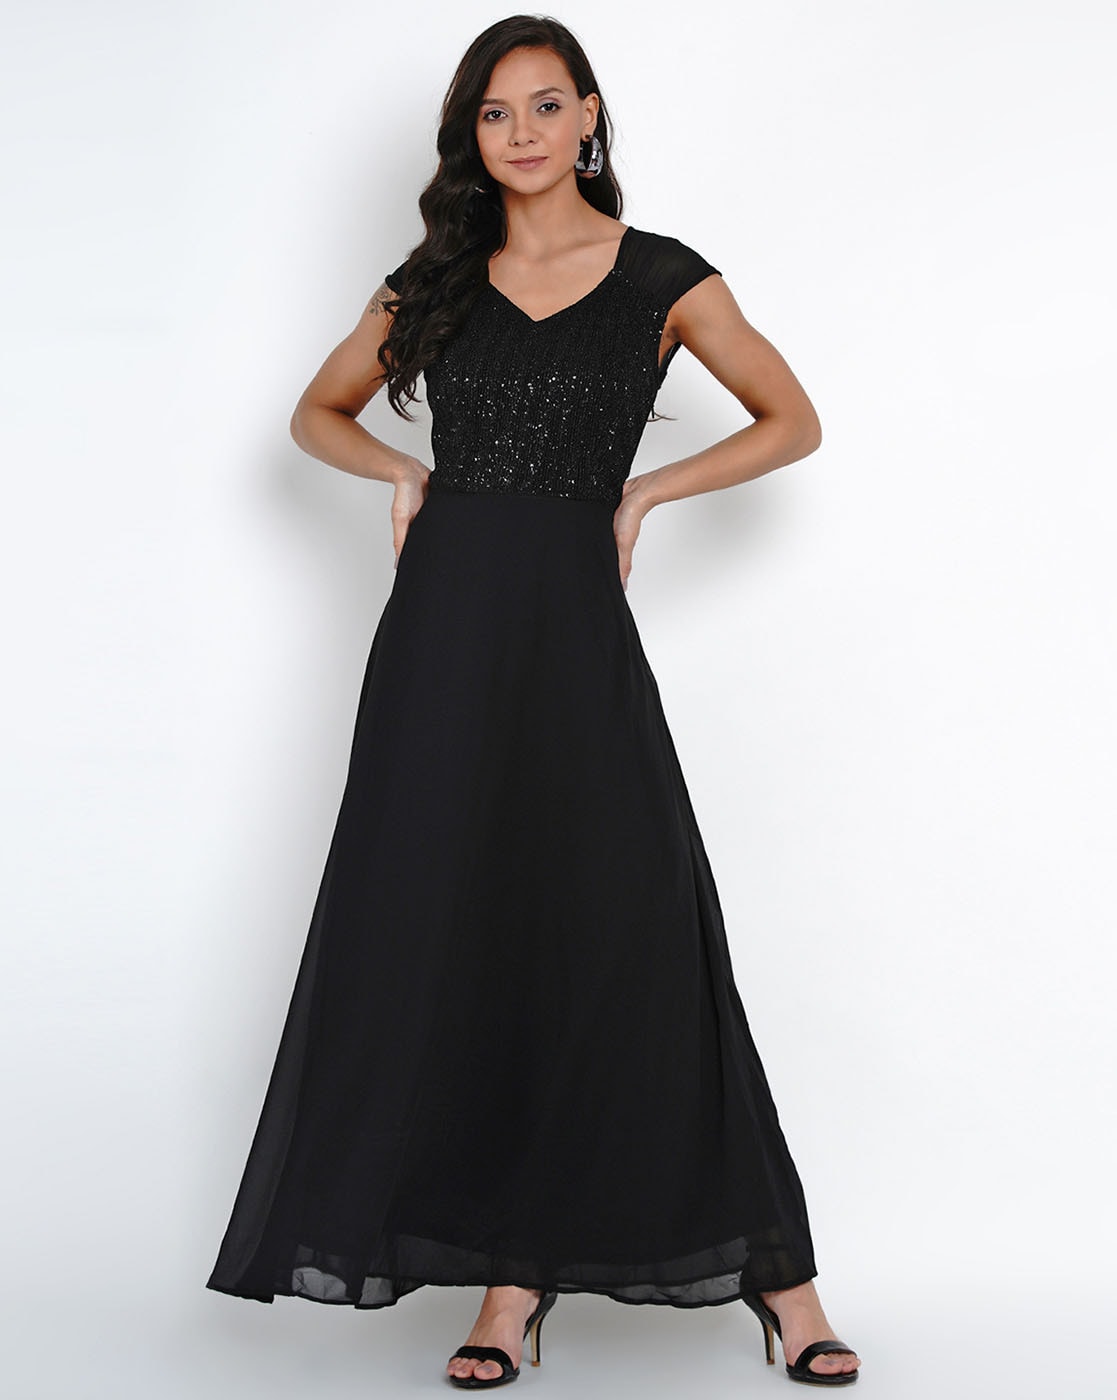 Buy ENTELLUS Womens Black Colour Chiffon Lurex Fabric Sleeveless Gown Dress  (Size - XS to 6XL) (XXXXX-Large) at Amazon.in